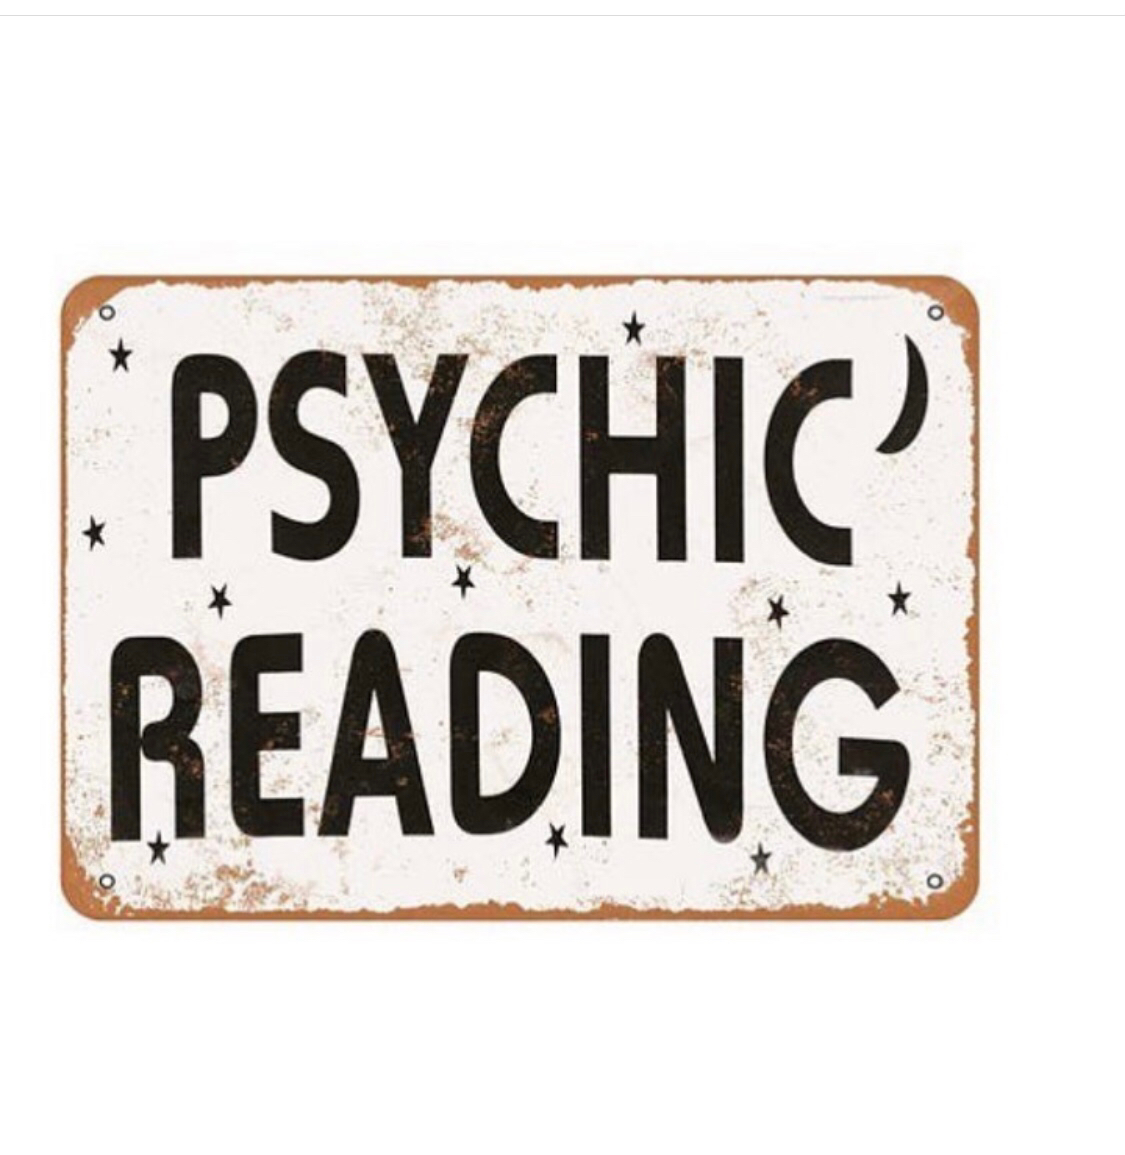  psychic reading 